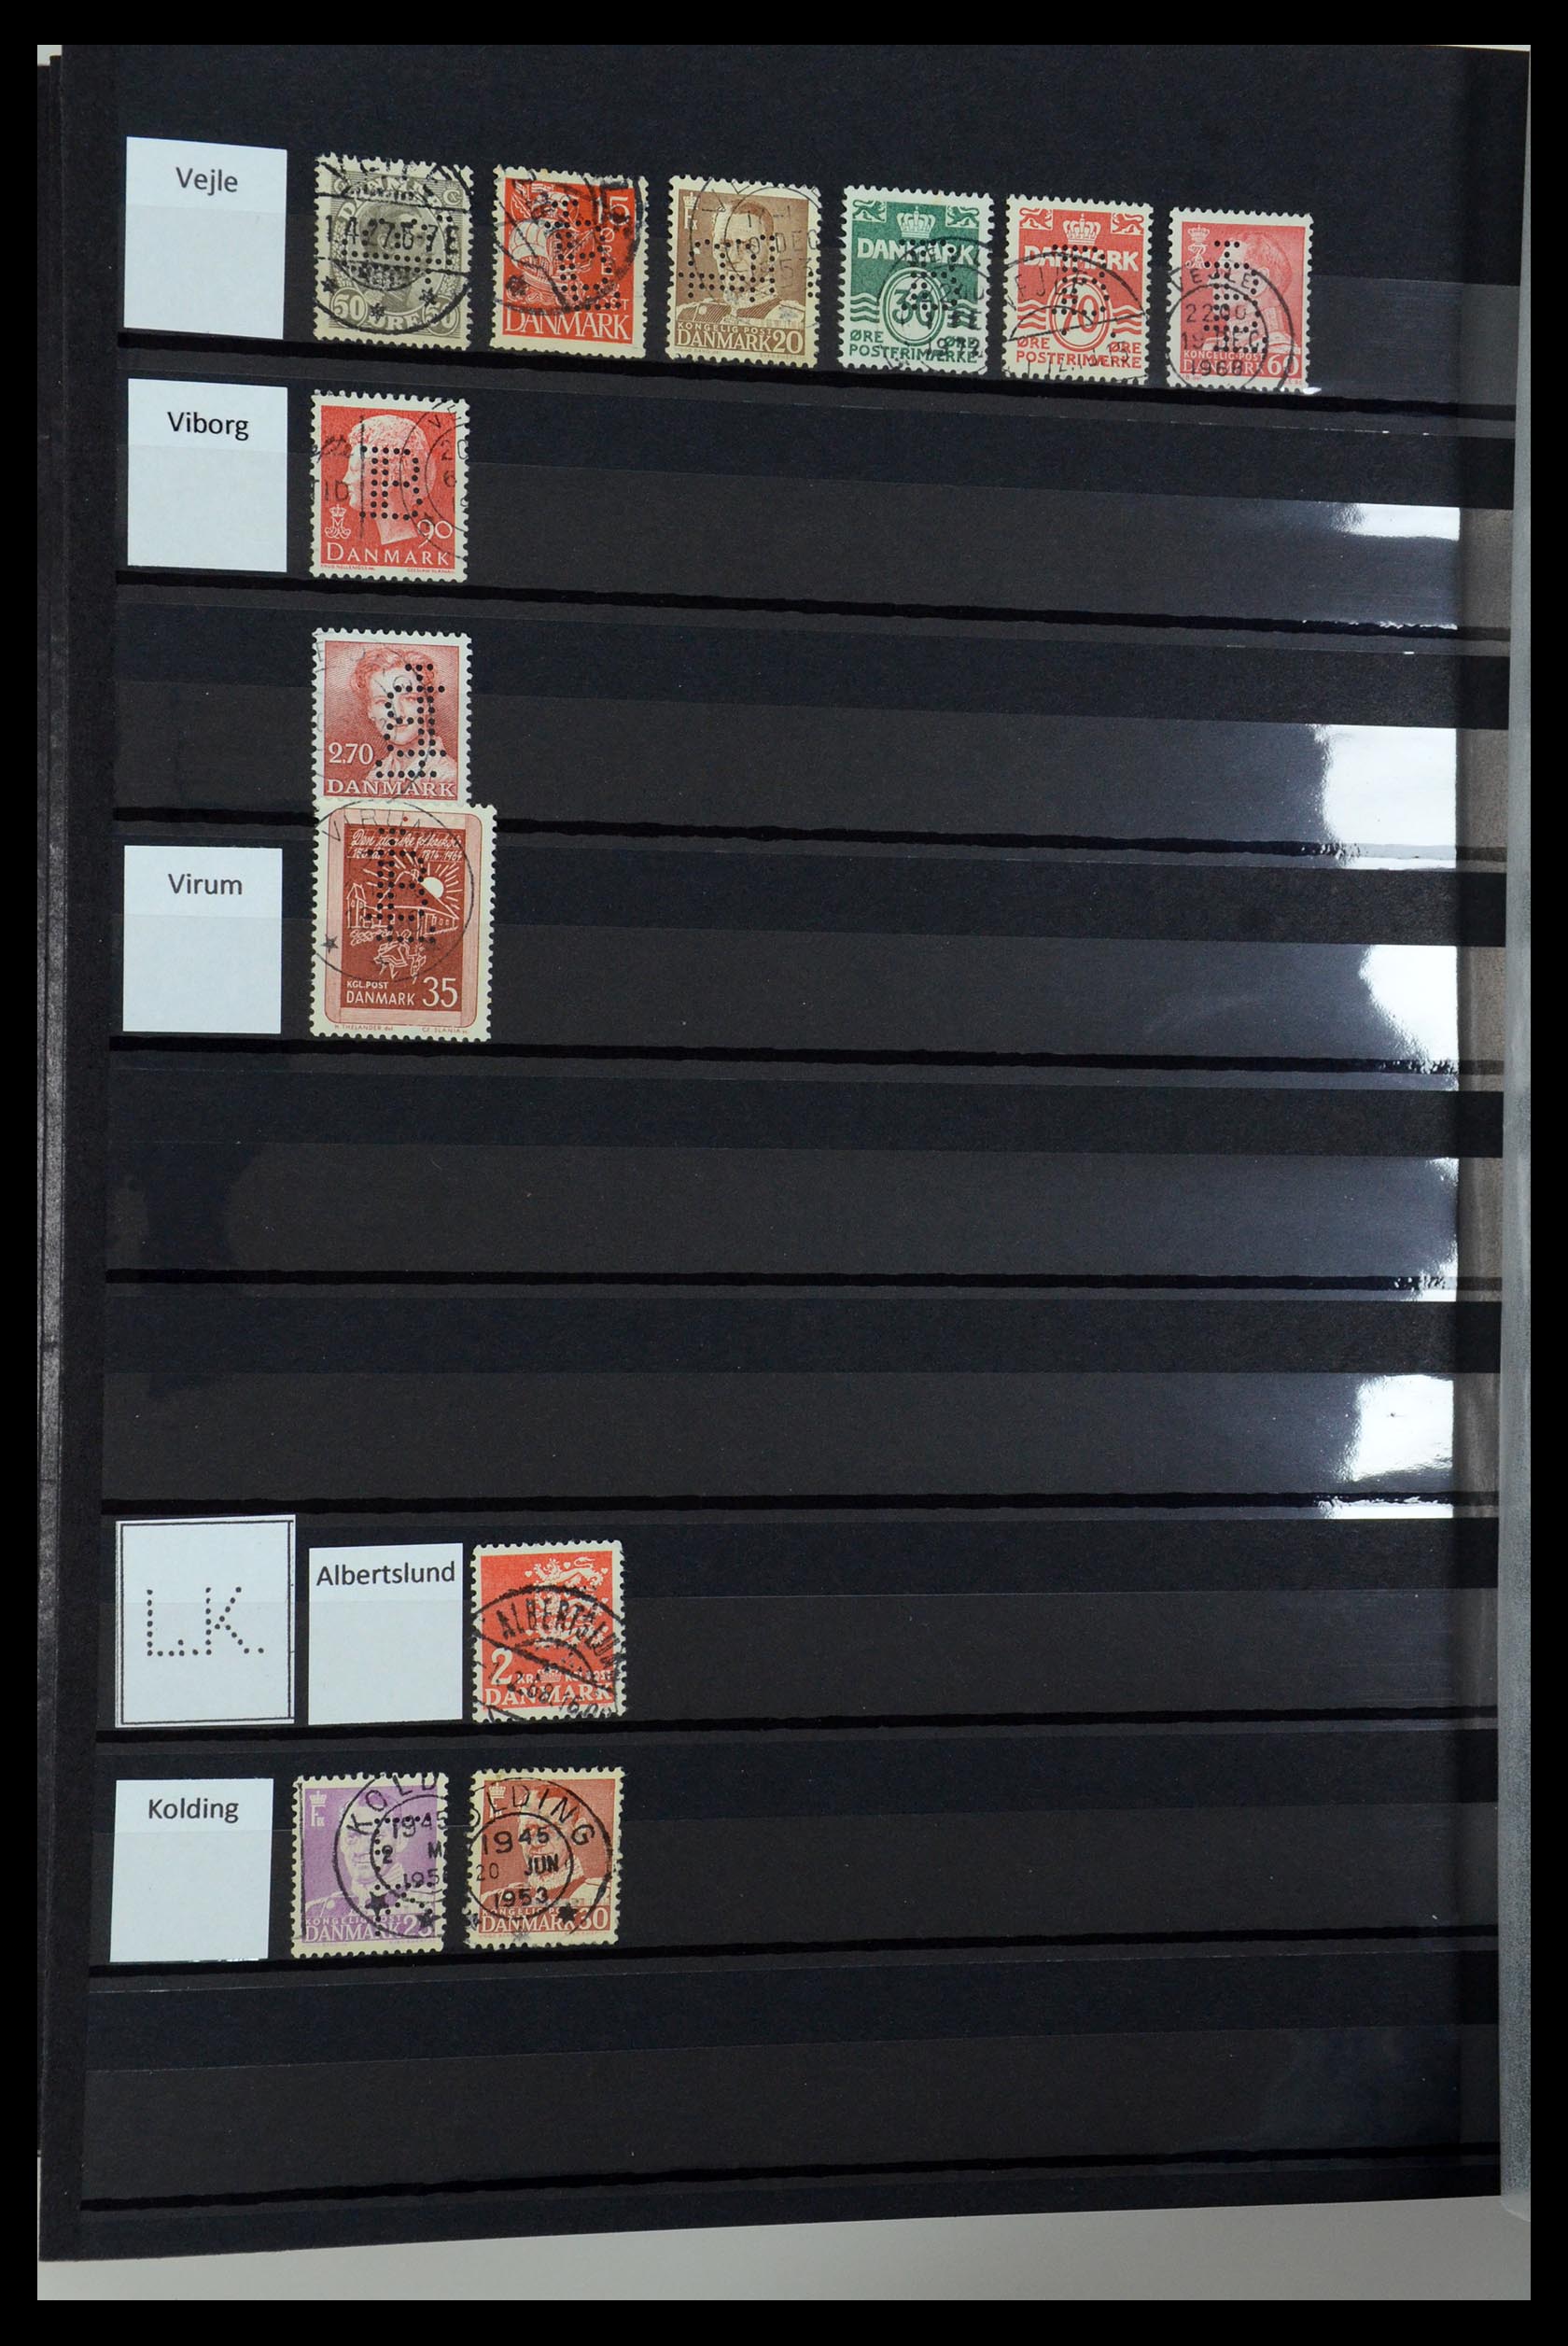 36396 093 - Stamp collection 36396 Denmark perfins.